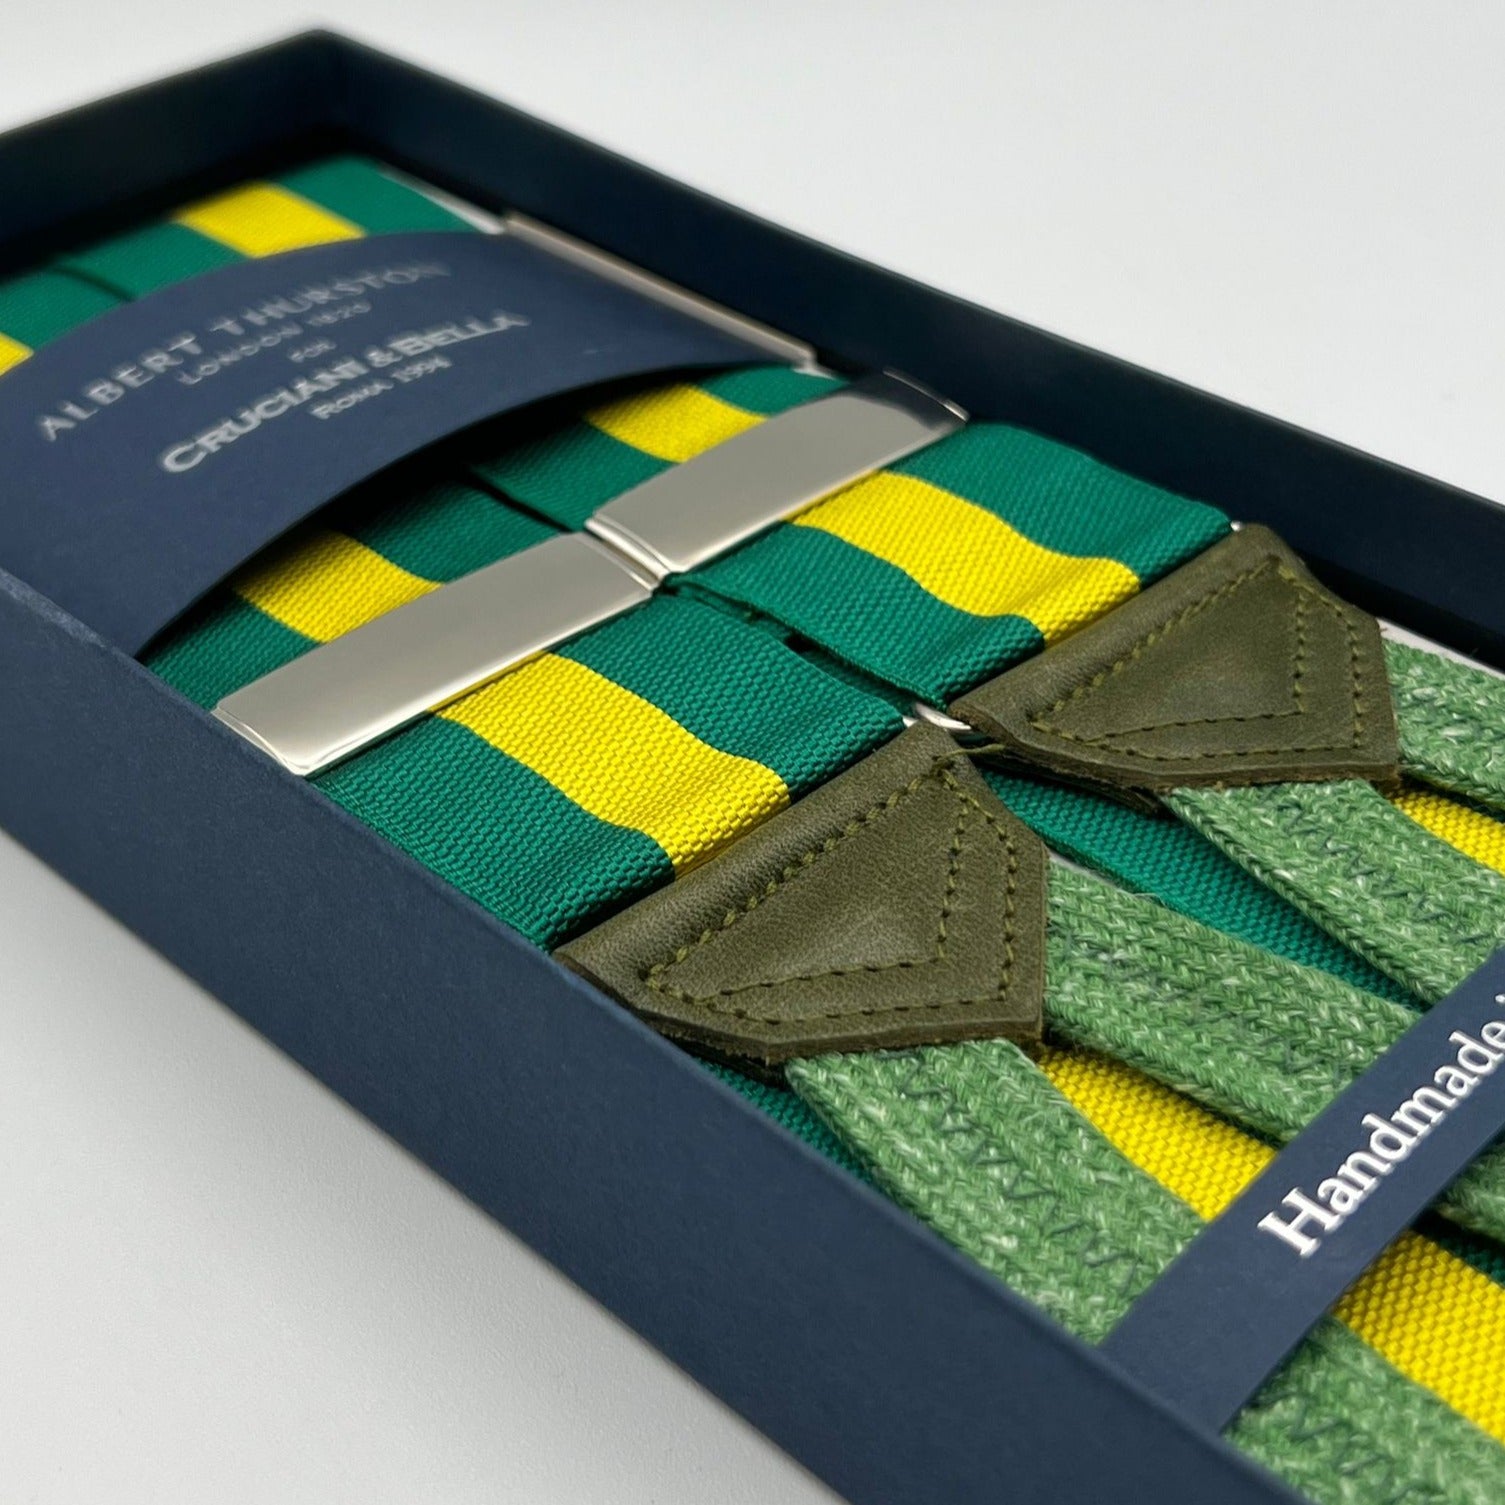 Albert Thurston - Woven Barathea Braces  - 40 mm -  Green and Yellow Stripes #5648